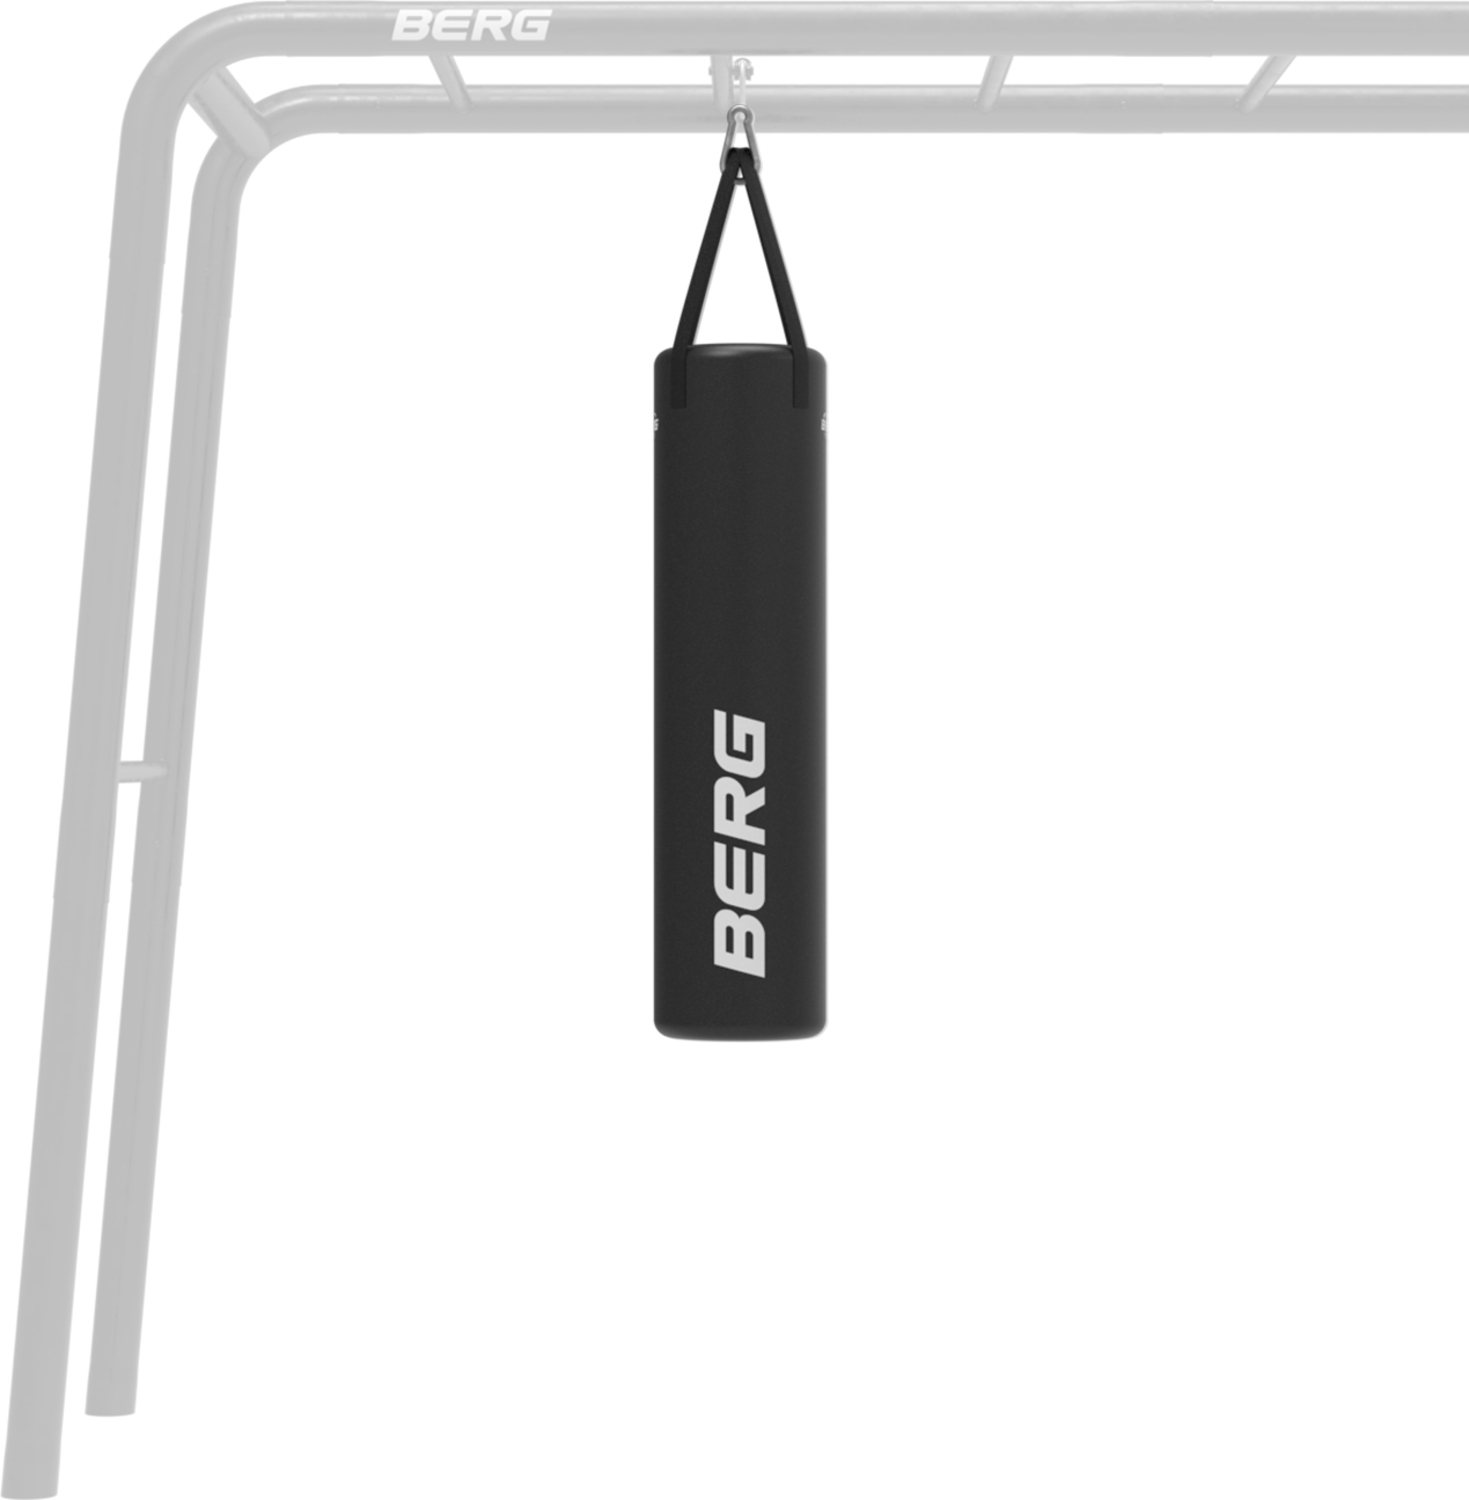 BERG PlayBase Boxing bag